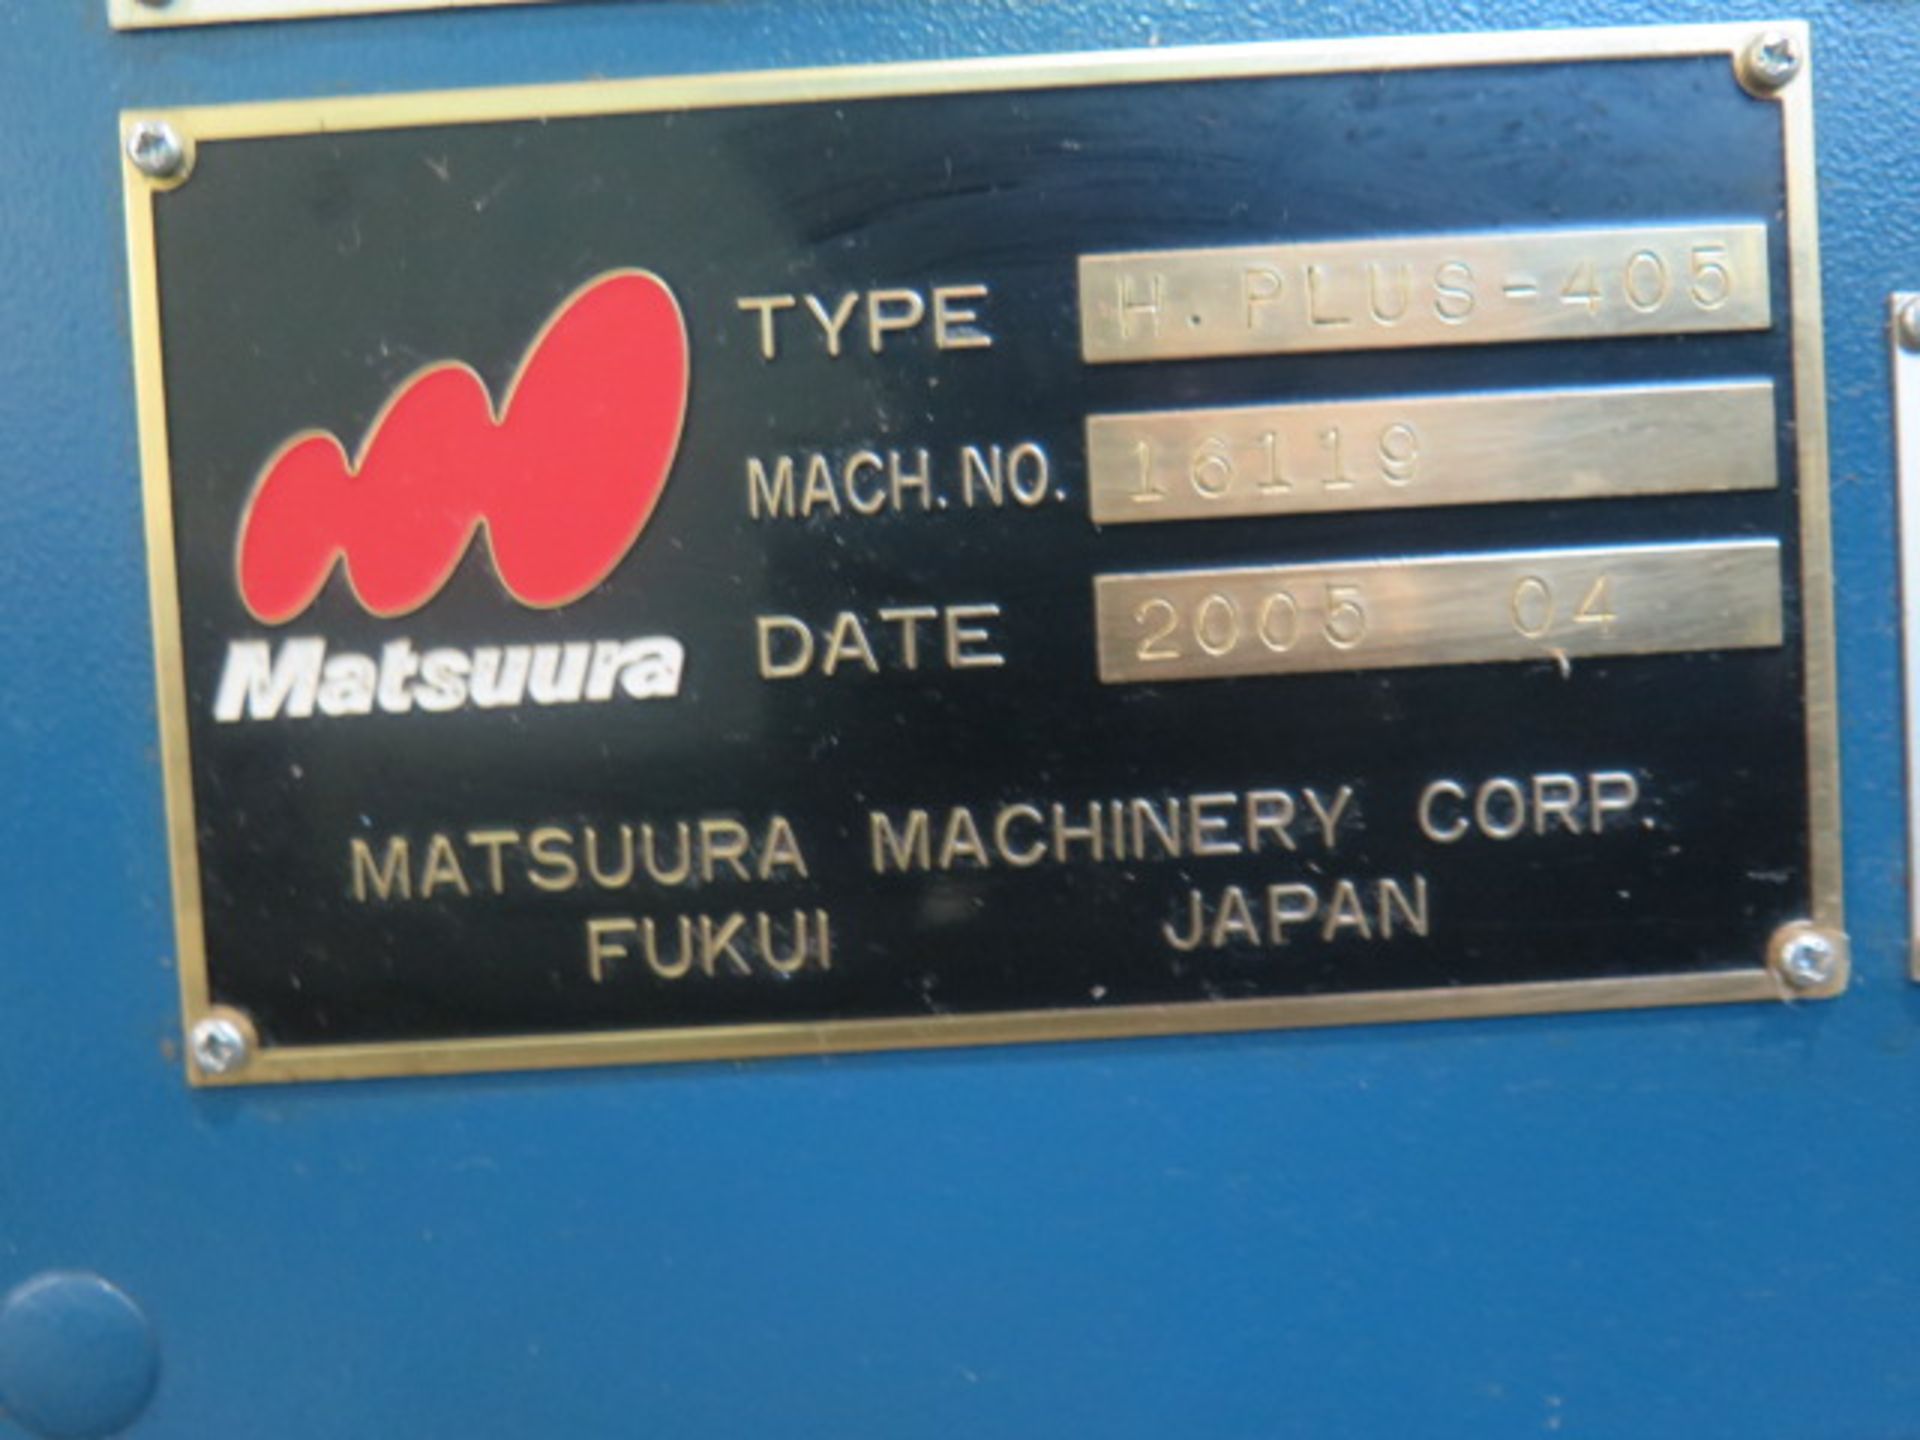 2005 Matsuura H.Plus-405 6-Pallet CNC HMC s/n 16119 w/ Matsuura G-Tech 30i, SOLD AS IS - Image 37 of 37